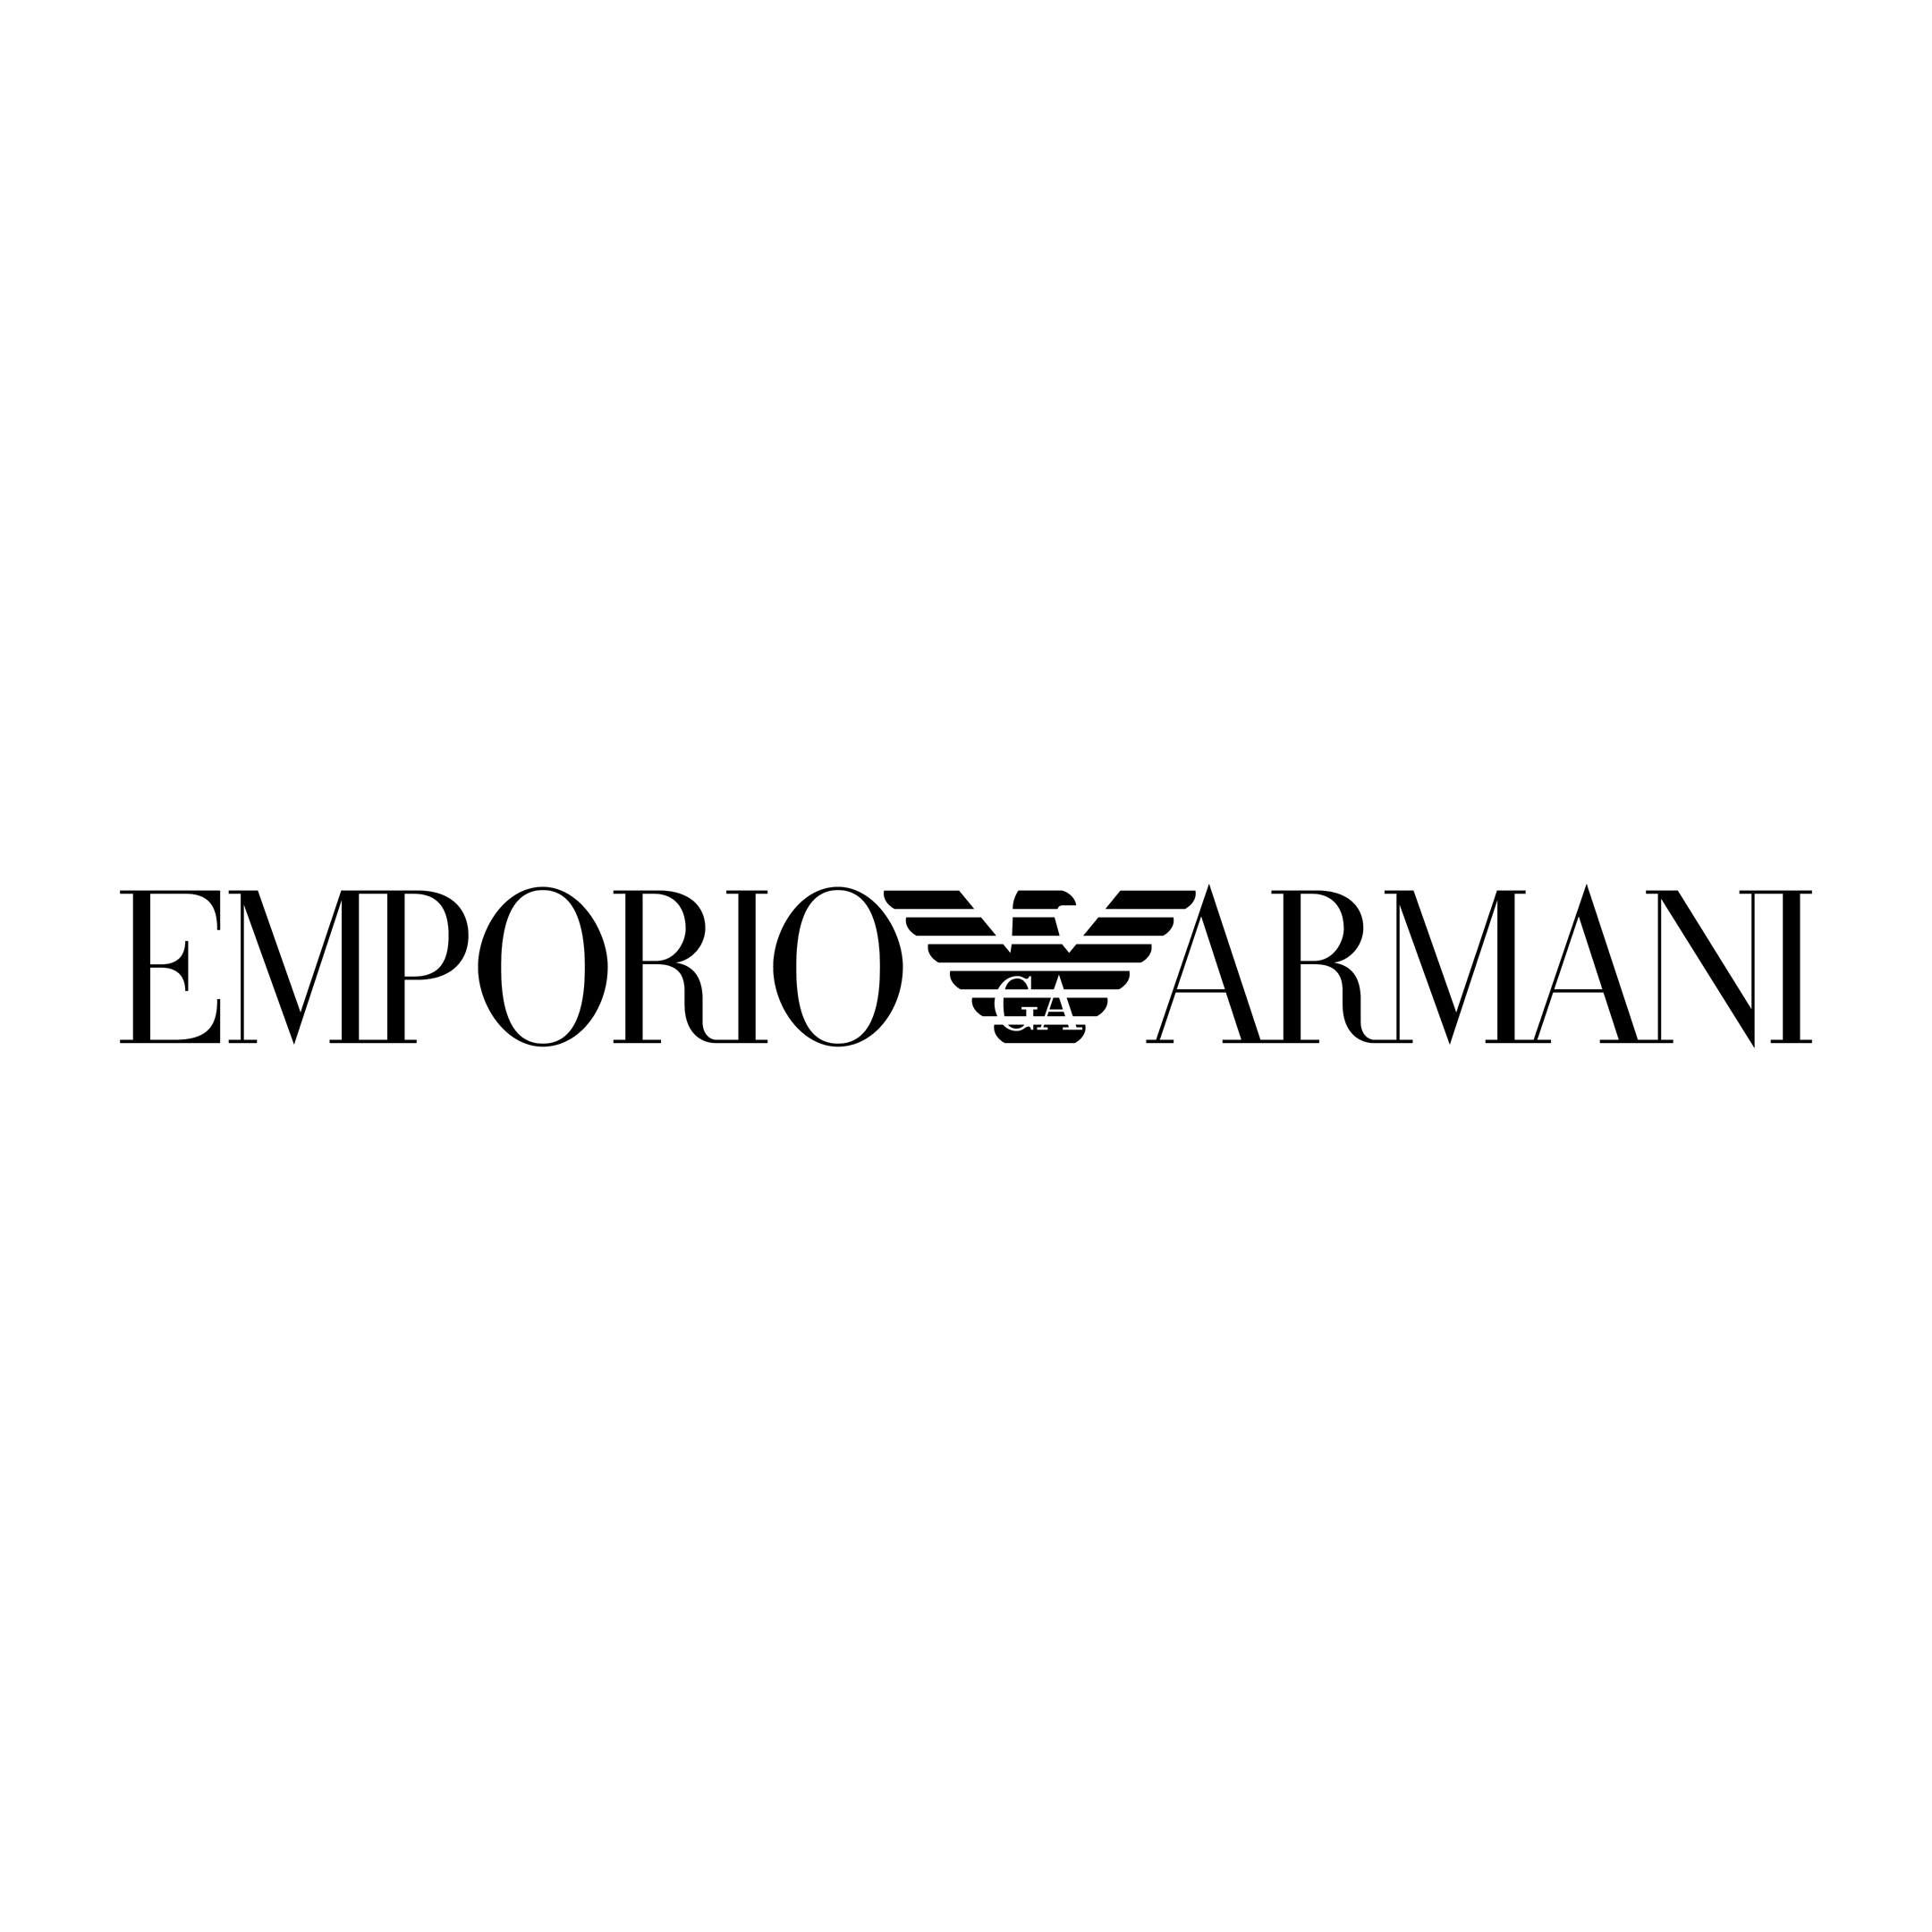 Emporio-Armani-Symbol